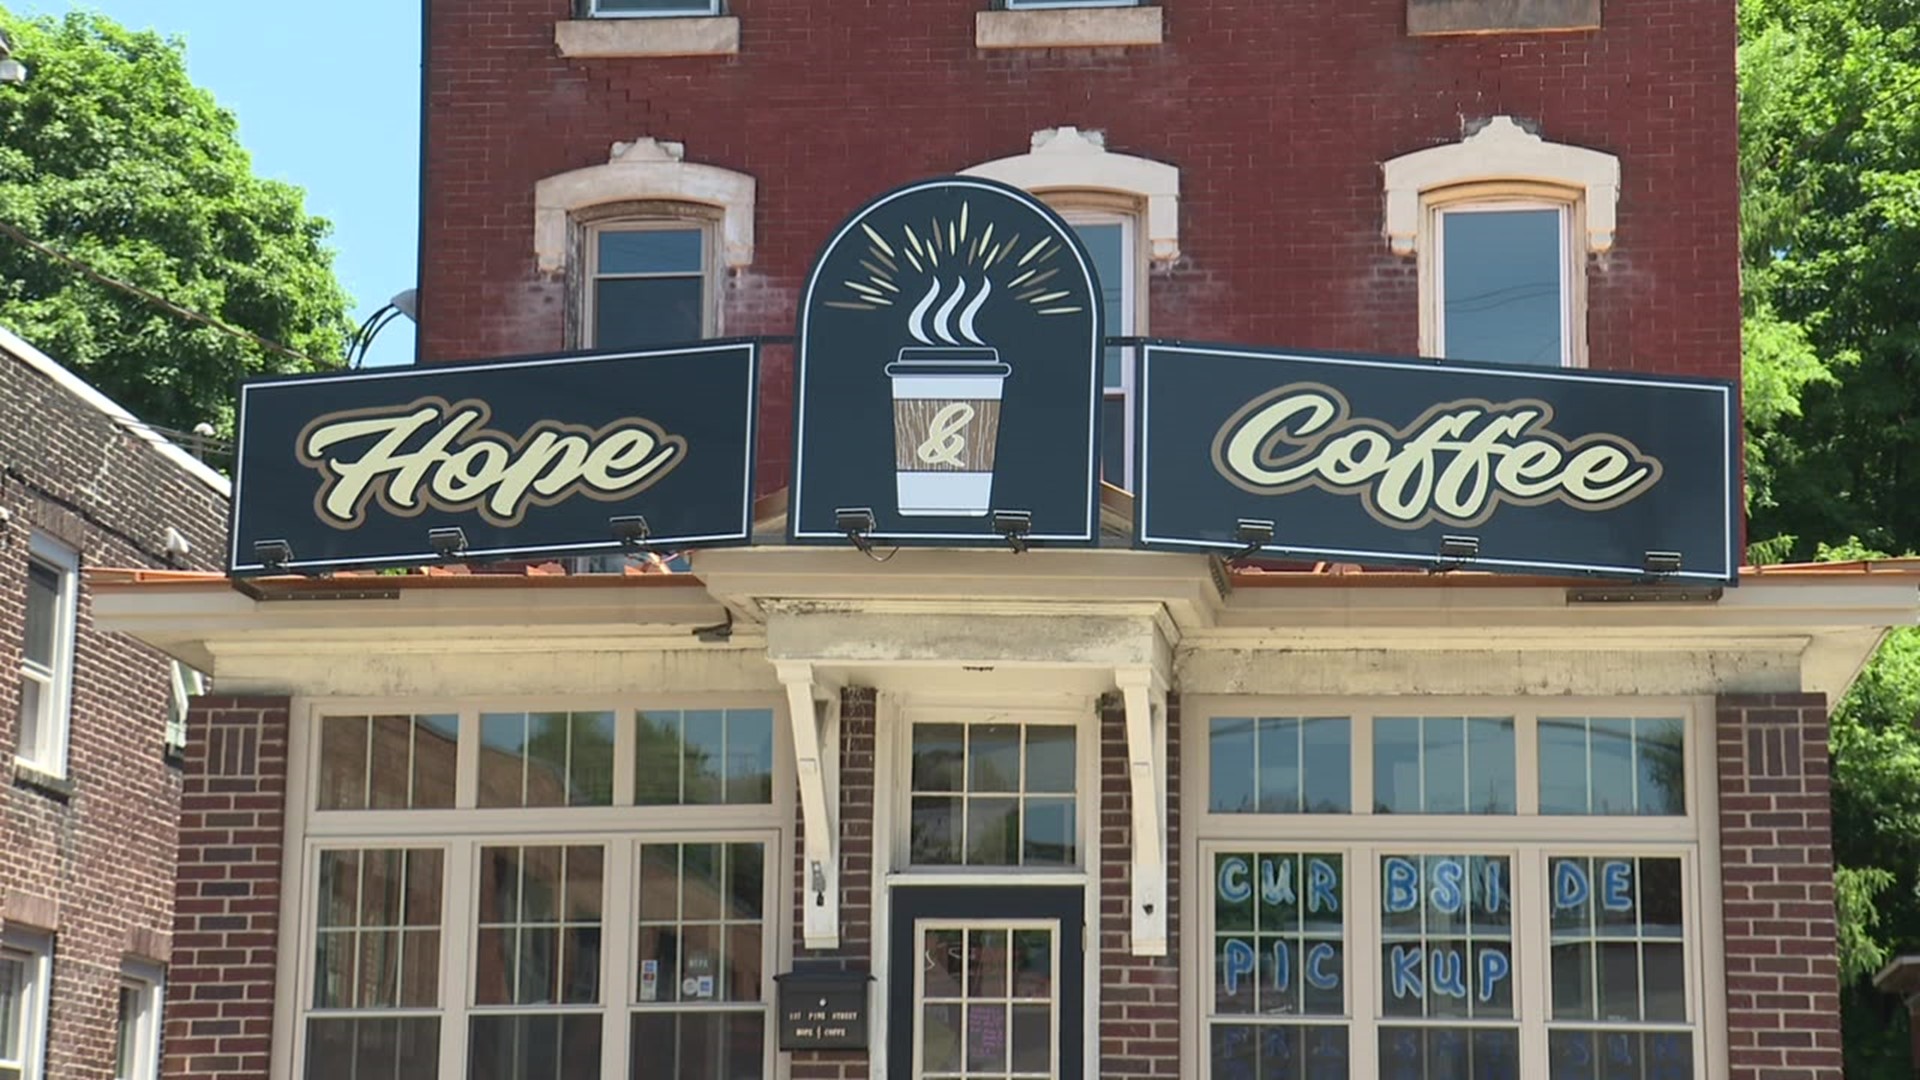 Hope & Coffee in Tamaqua has always had a unique vision.